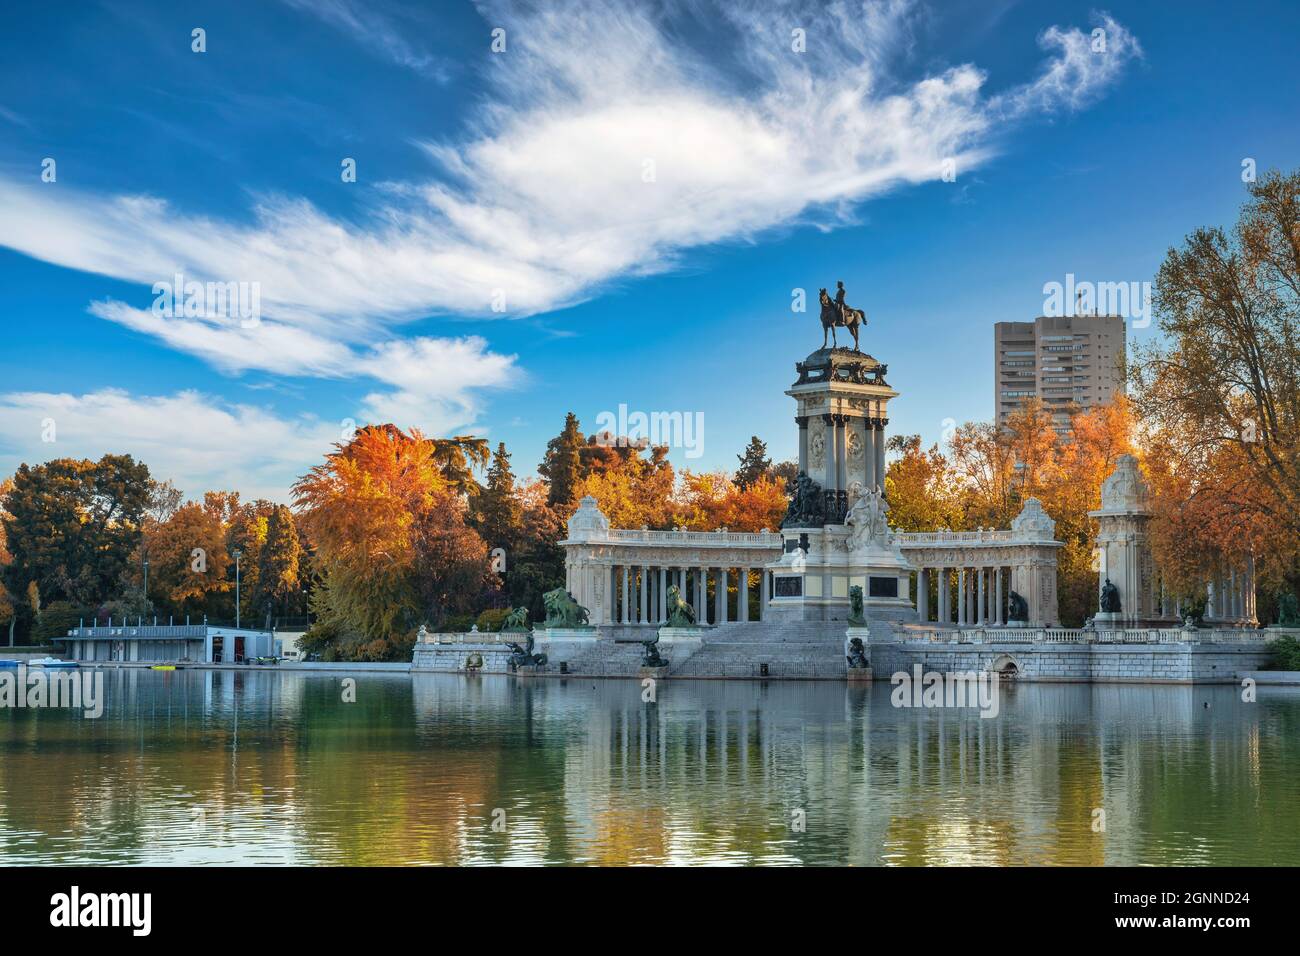 Madrid Spain, sunrise city skyline at El Retiro Park with autumn foliage season Stock Photo